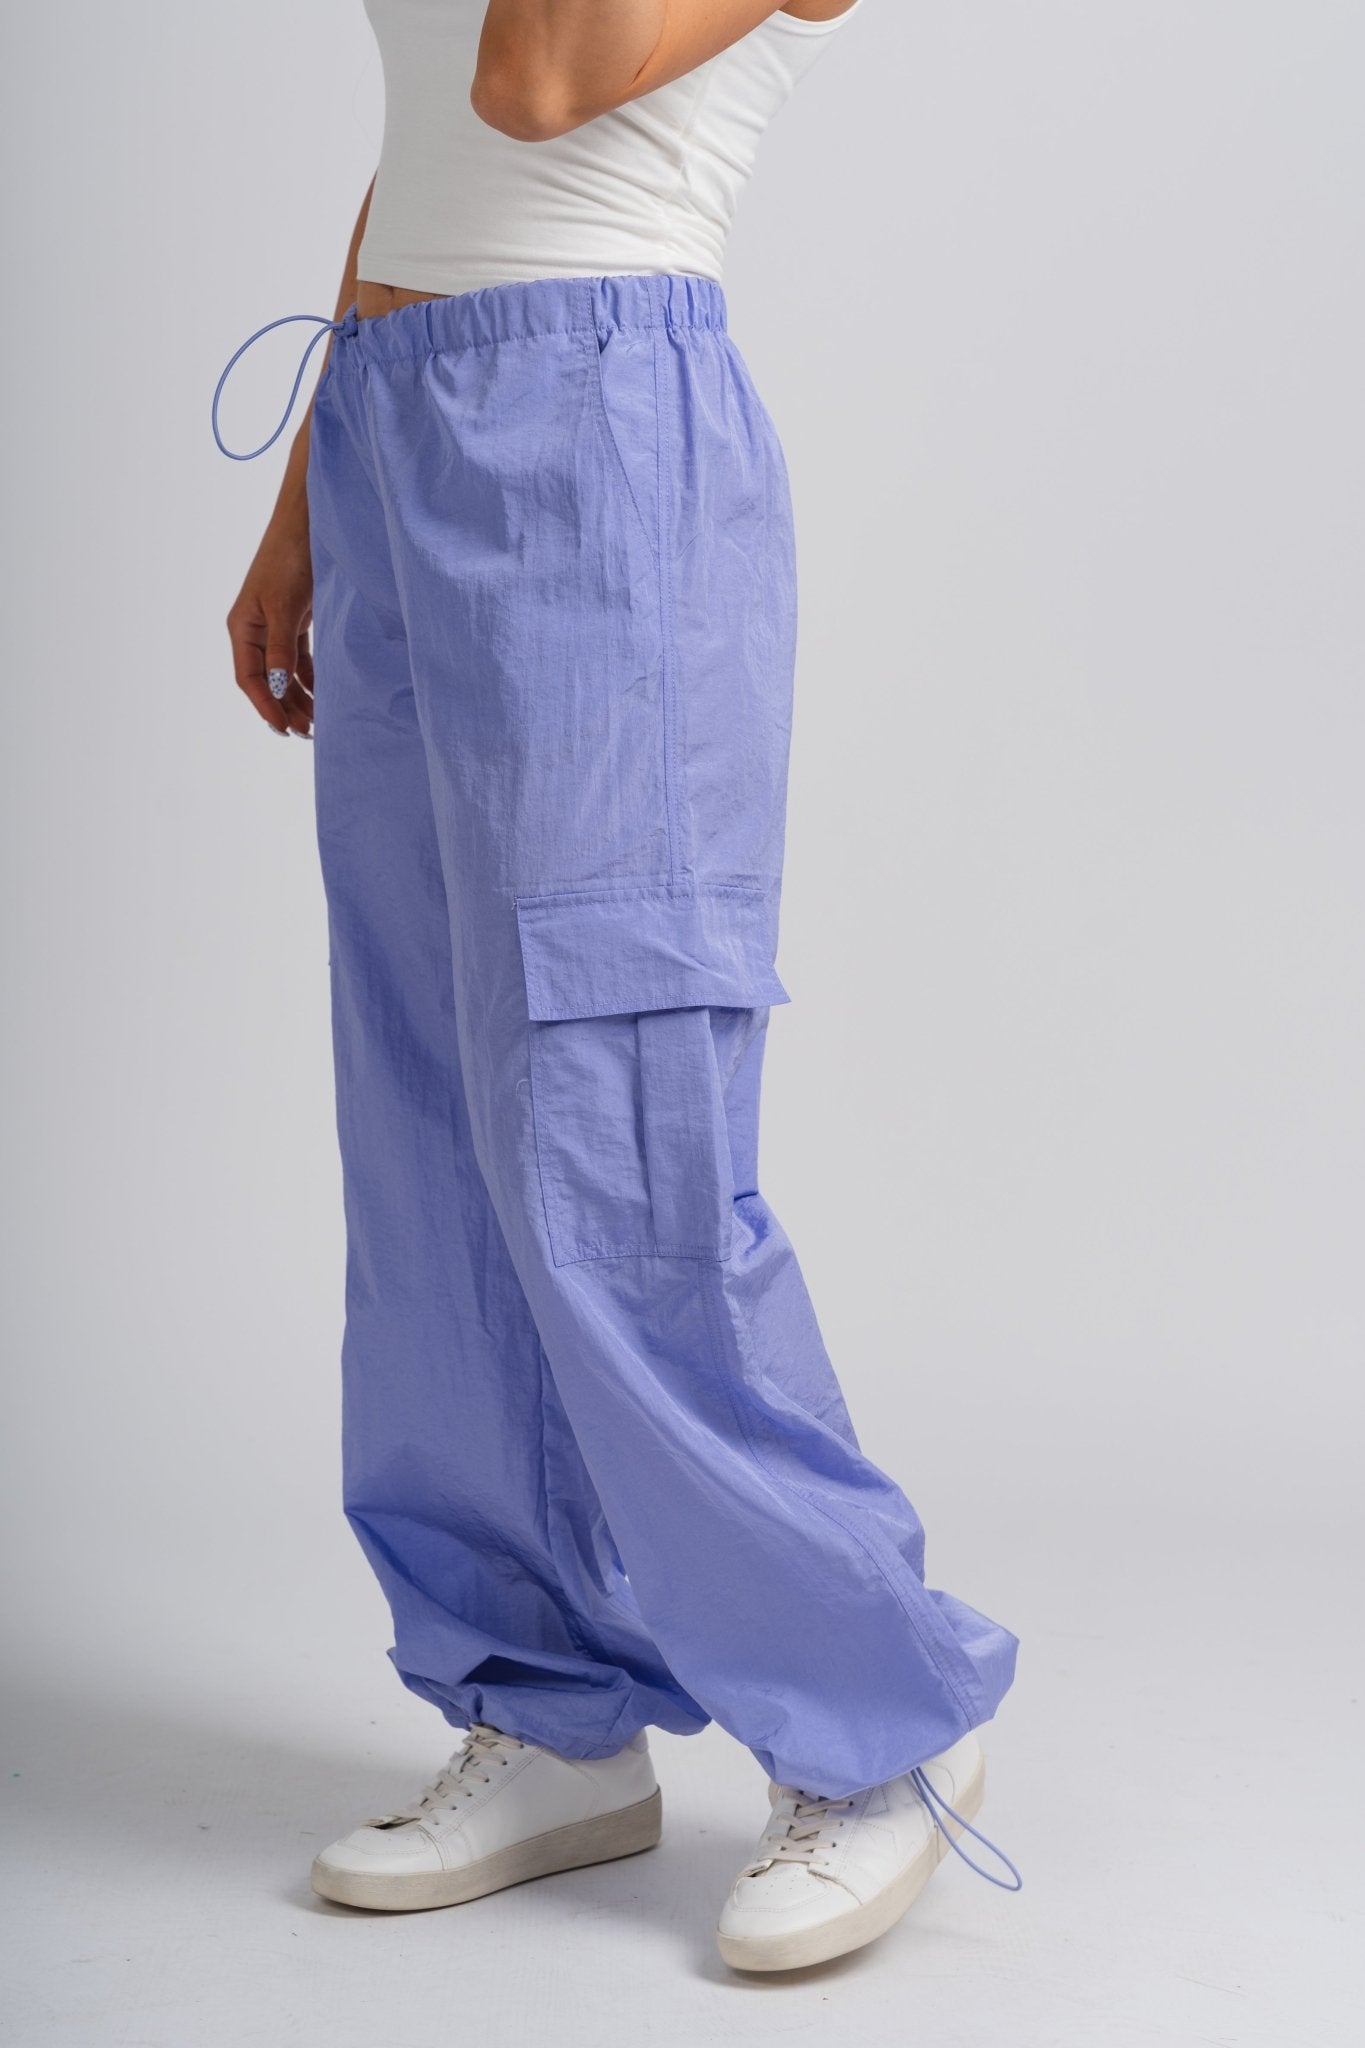 Nylon parachute pants pastel indigo - Affordable Pants - Unique Easter Style at Lush Fashion Lounge Boutique in Oklahoma